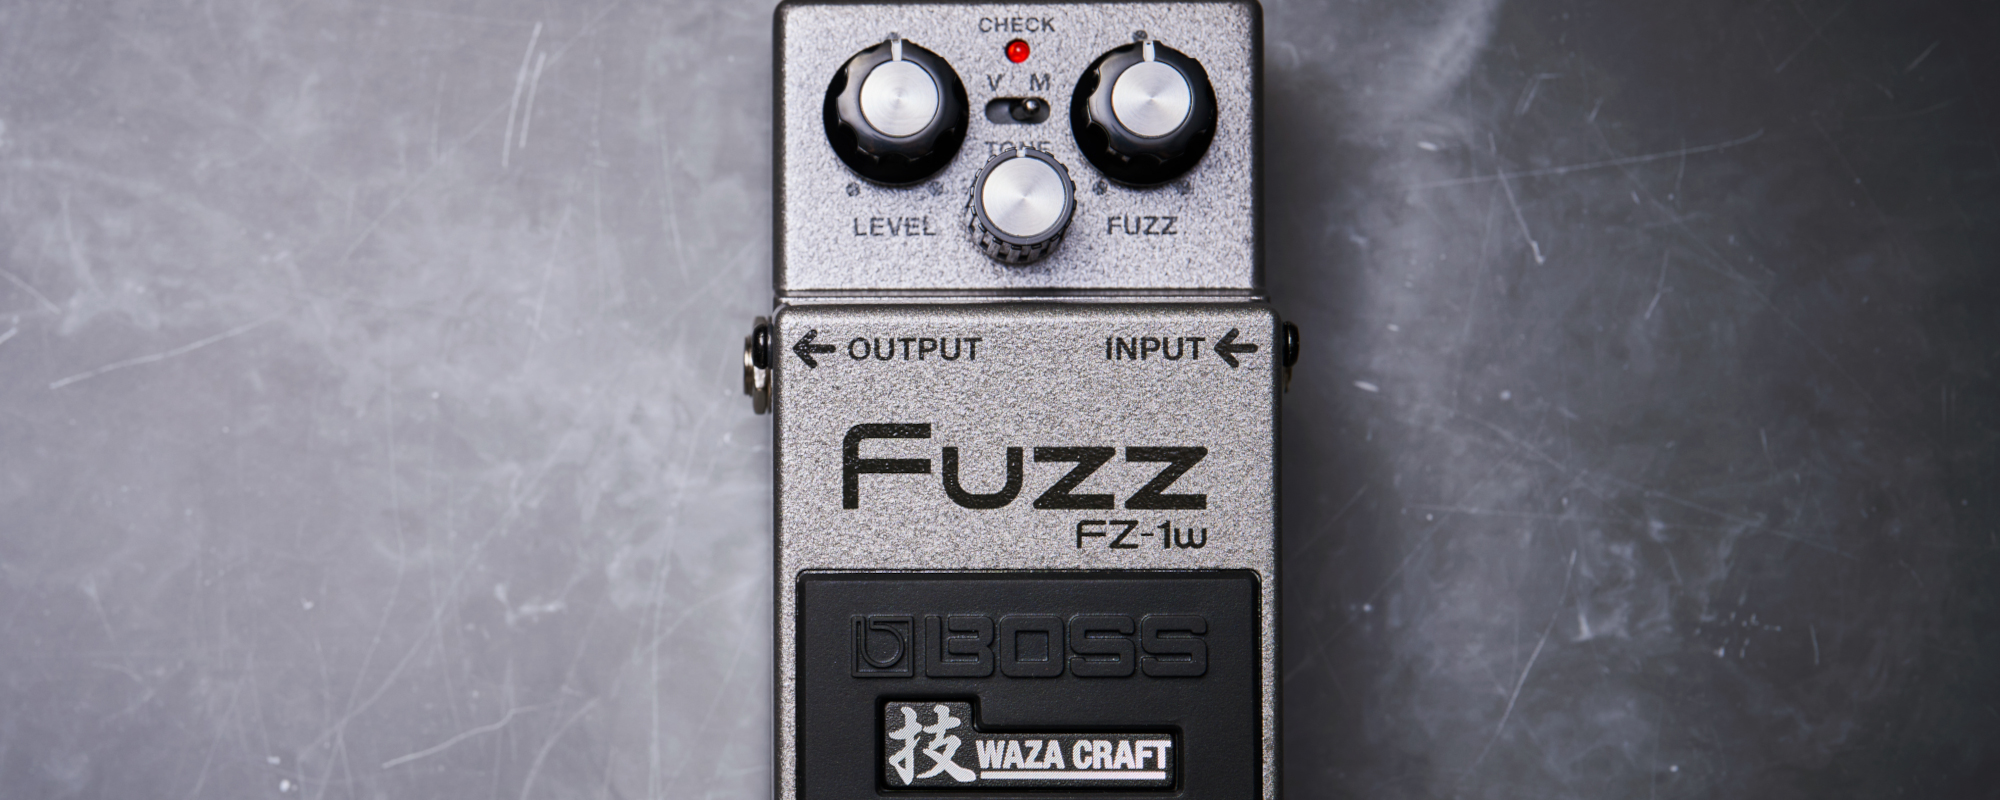 Gear Review: Boss FZ-1W Fuzz Pedal - American Songwriter